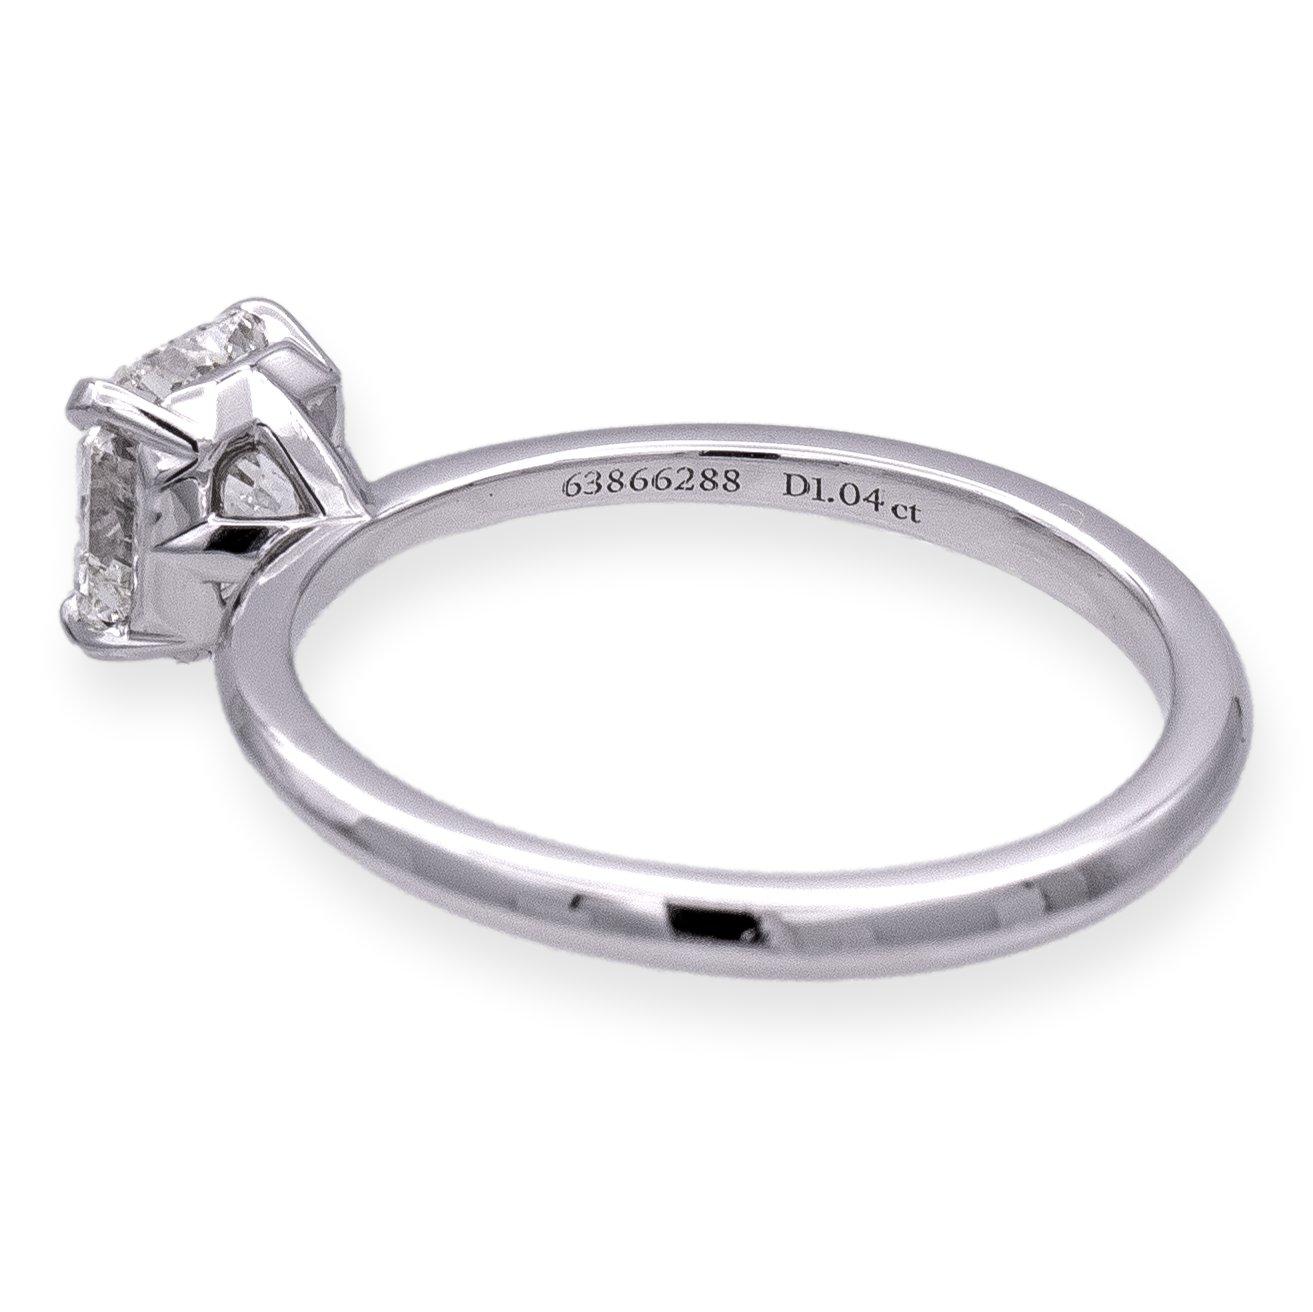 Tiffany & Co. Verlobungsring aus Platin mit True Cut-Diamant 1,04 Karat I VVS1 Damen